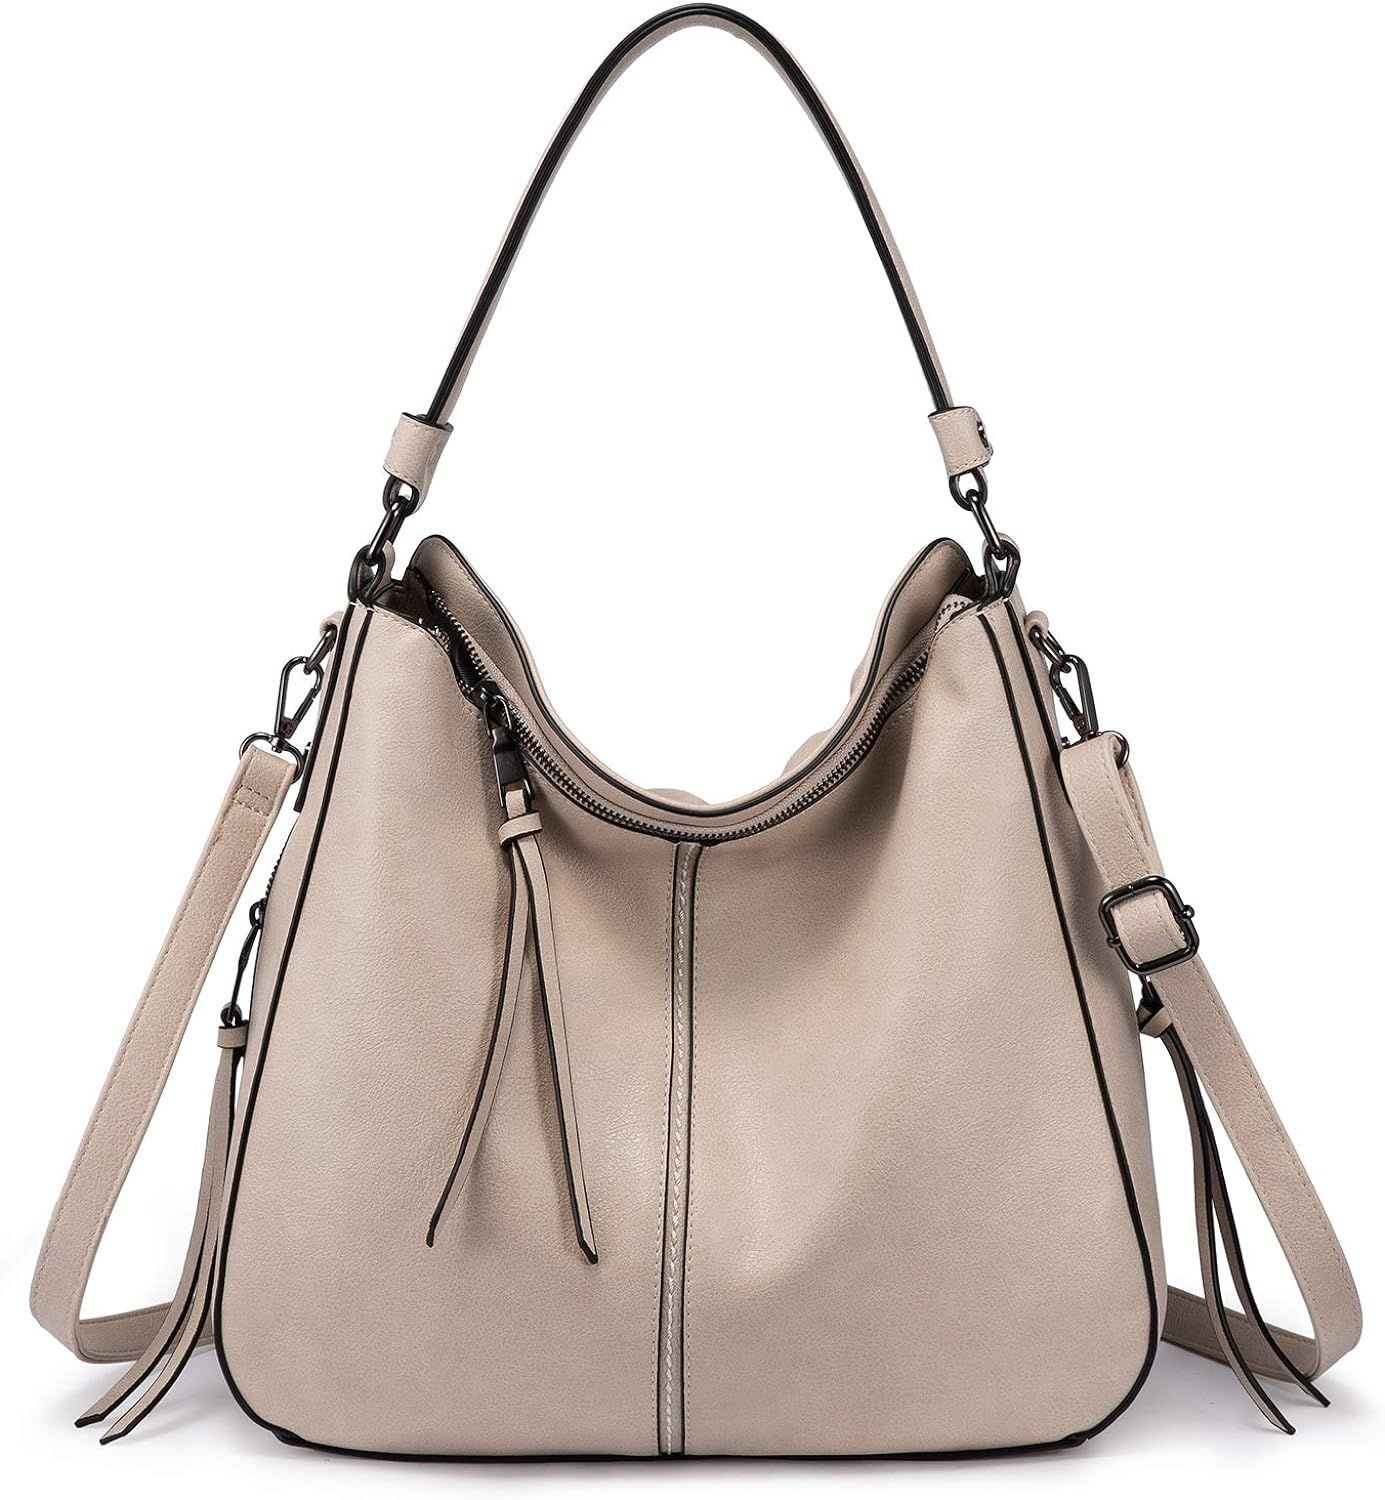 Handbags for Women Large Designer Ladies Hobo bag Bucket Purse Faux Leather | Amazon (US)